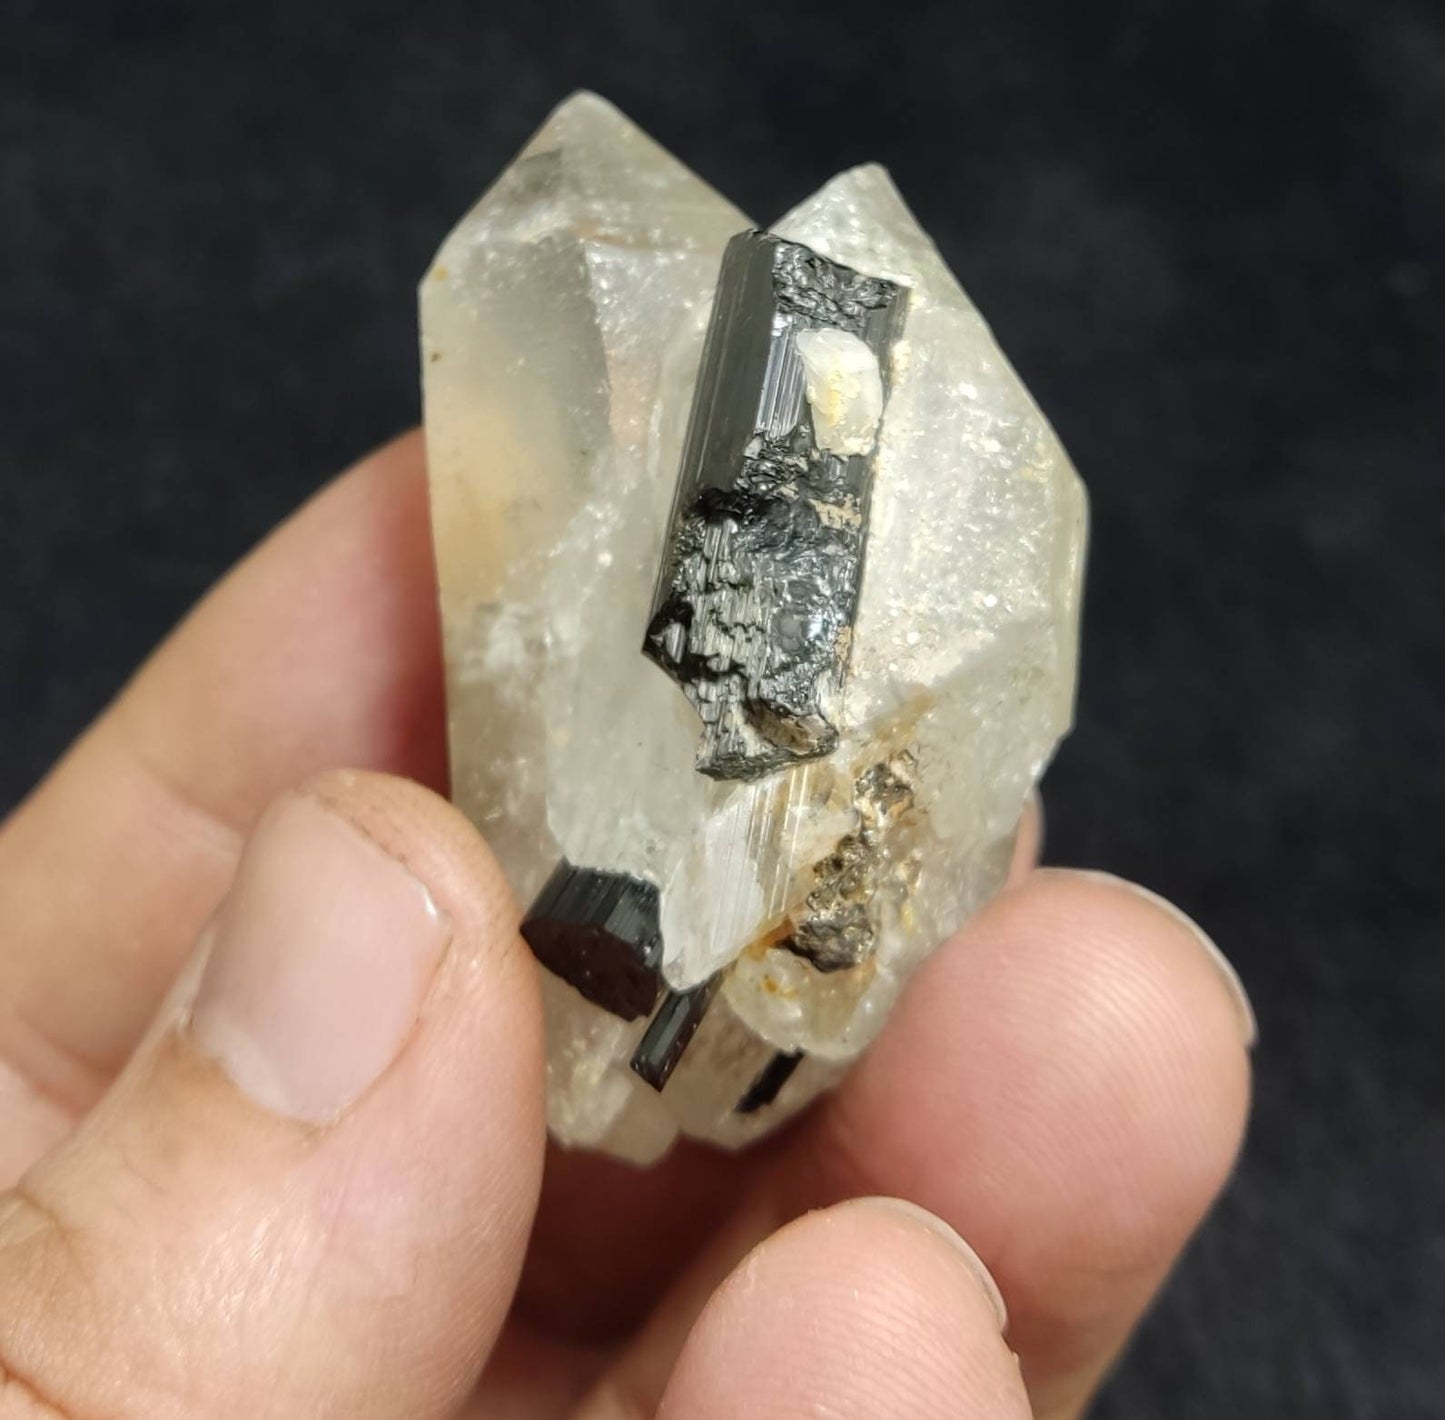 Smoky quartz crystal with Tourmaline crystals 58 grams